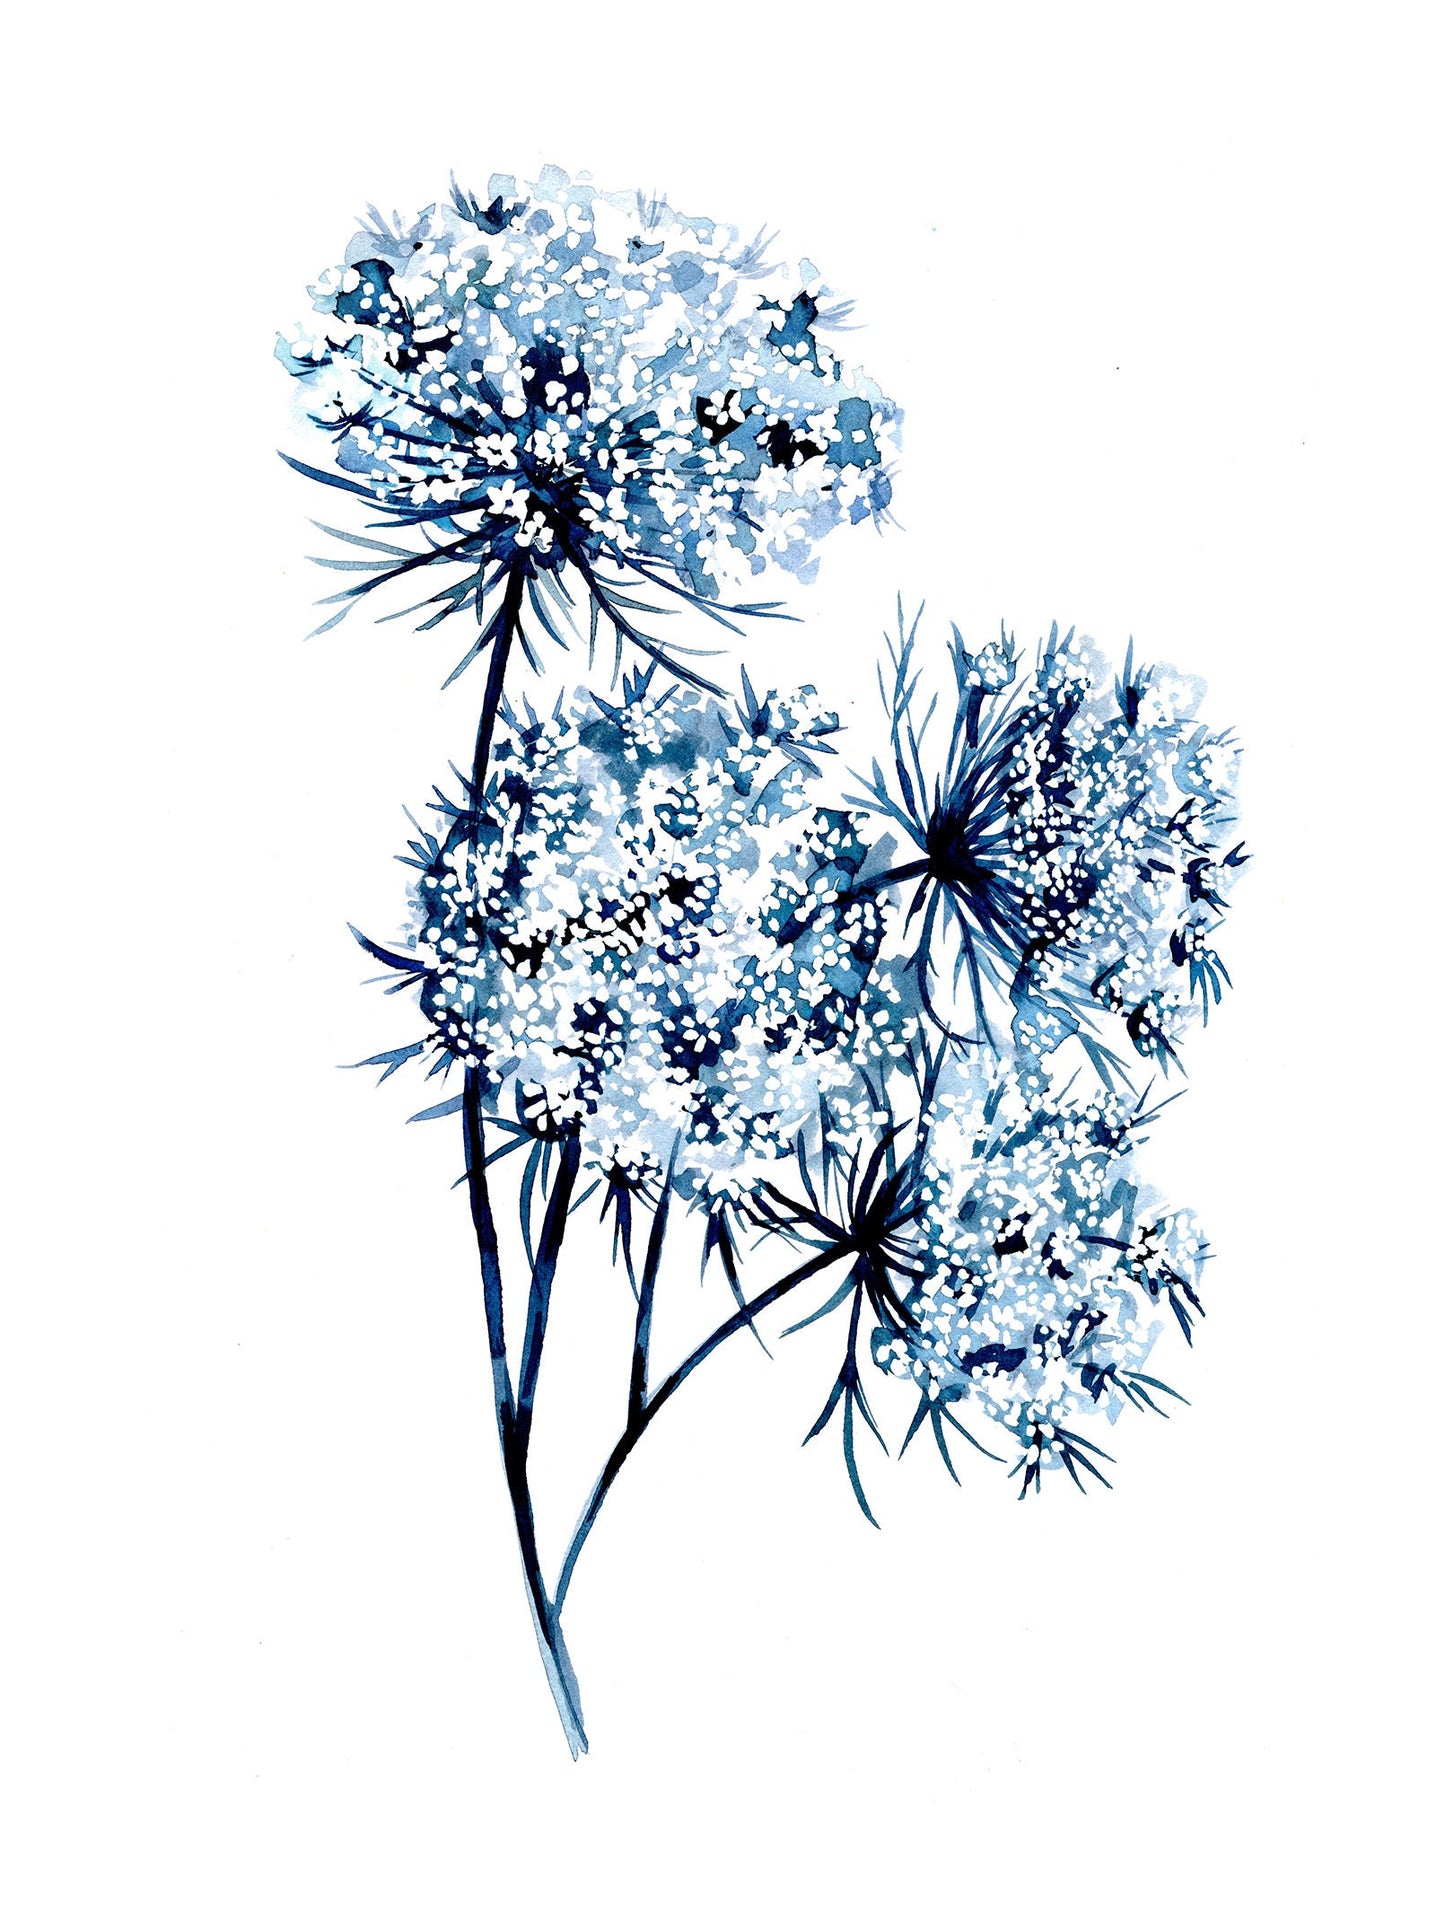 Indigo Queen Anne's Lace - PRINT, monochrome, watercolor, floral, wildflower, blue, stems. flowers, botanical art